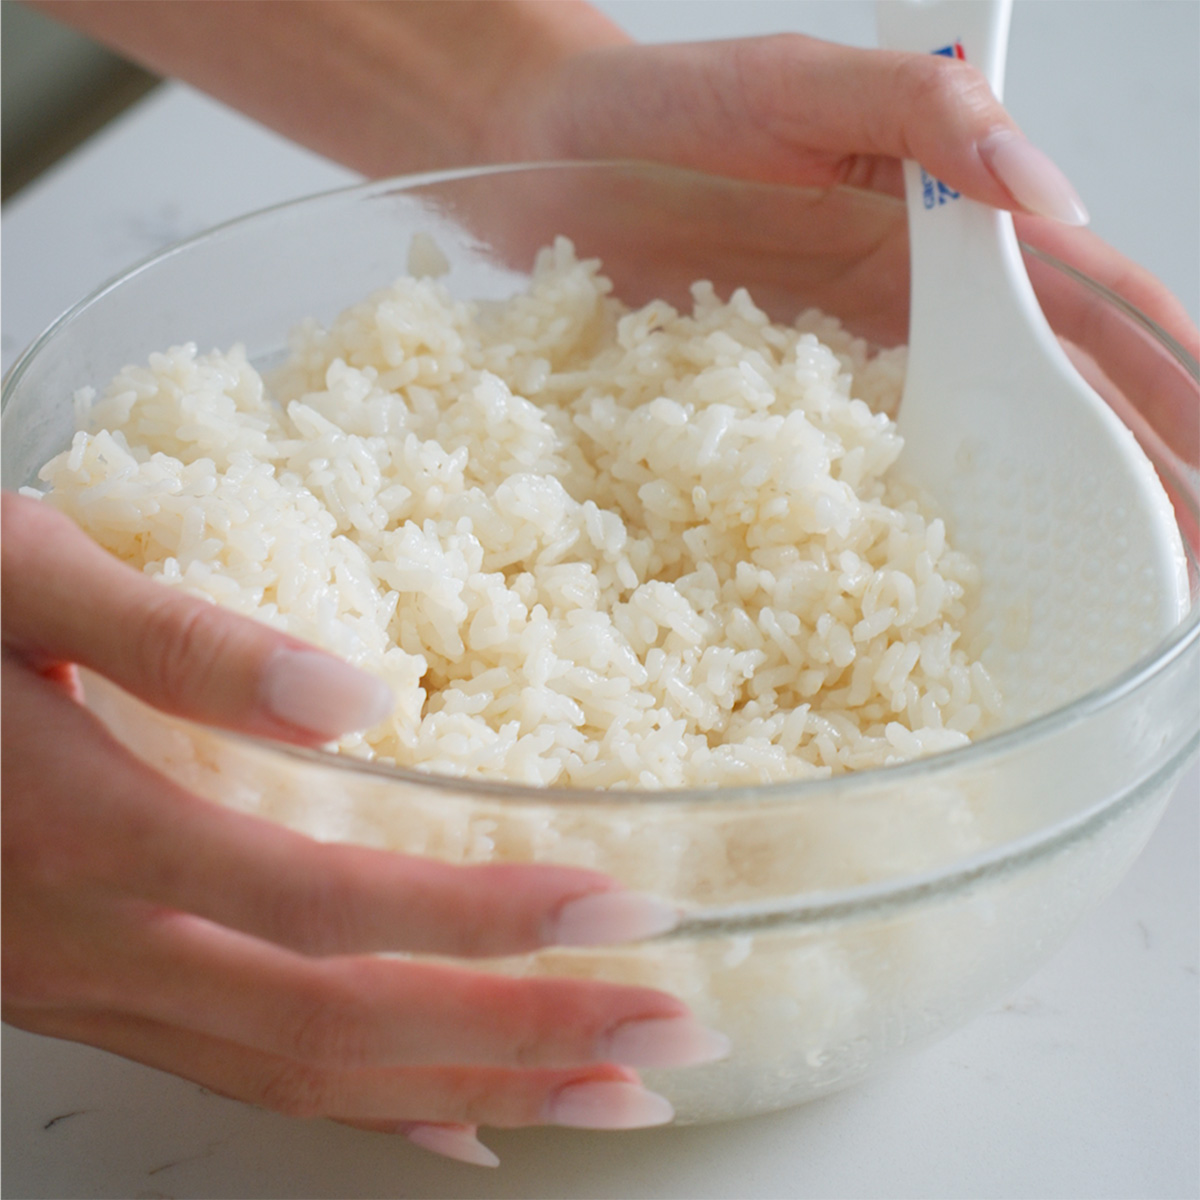 A glass bowl of korean seasoned rice for making rice balls.